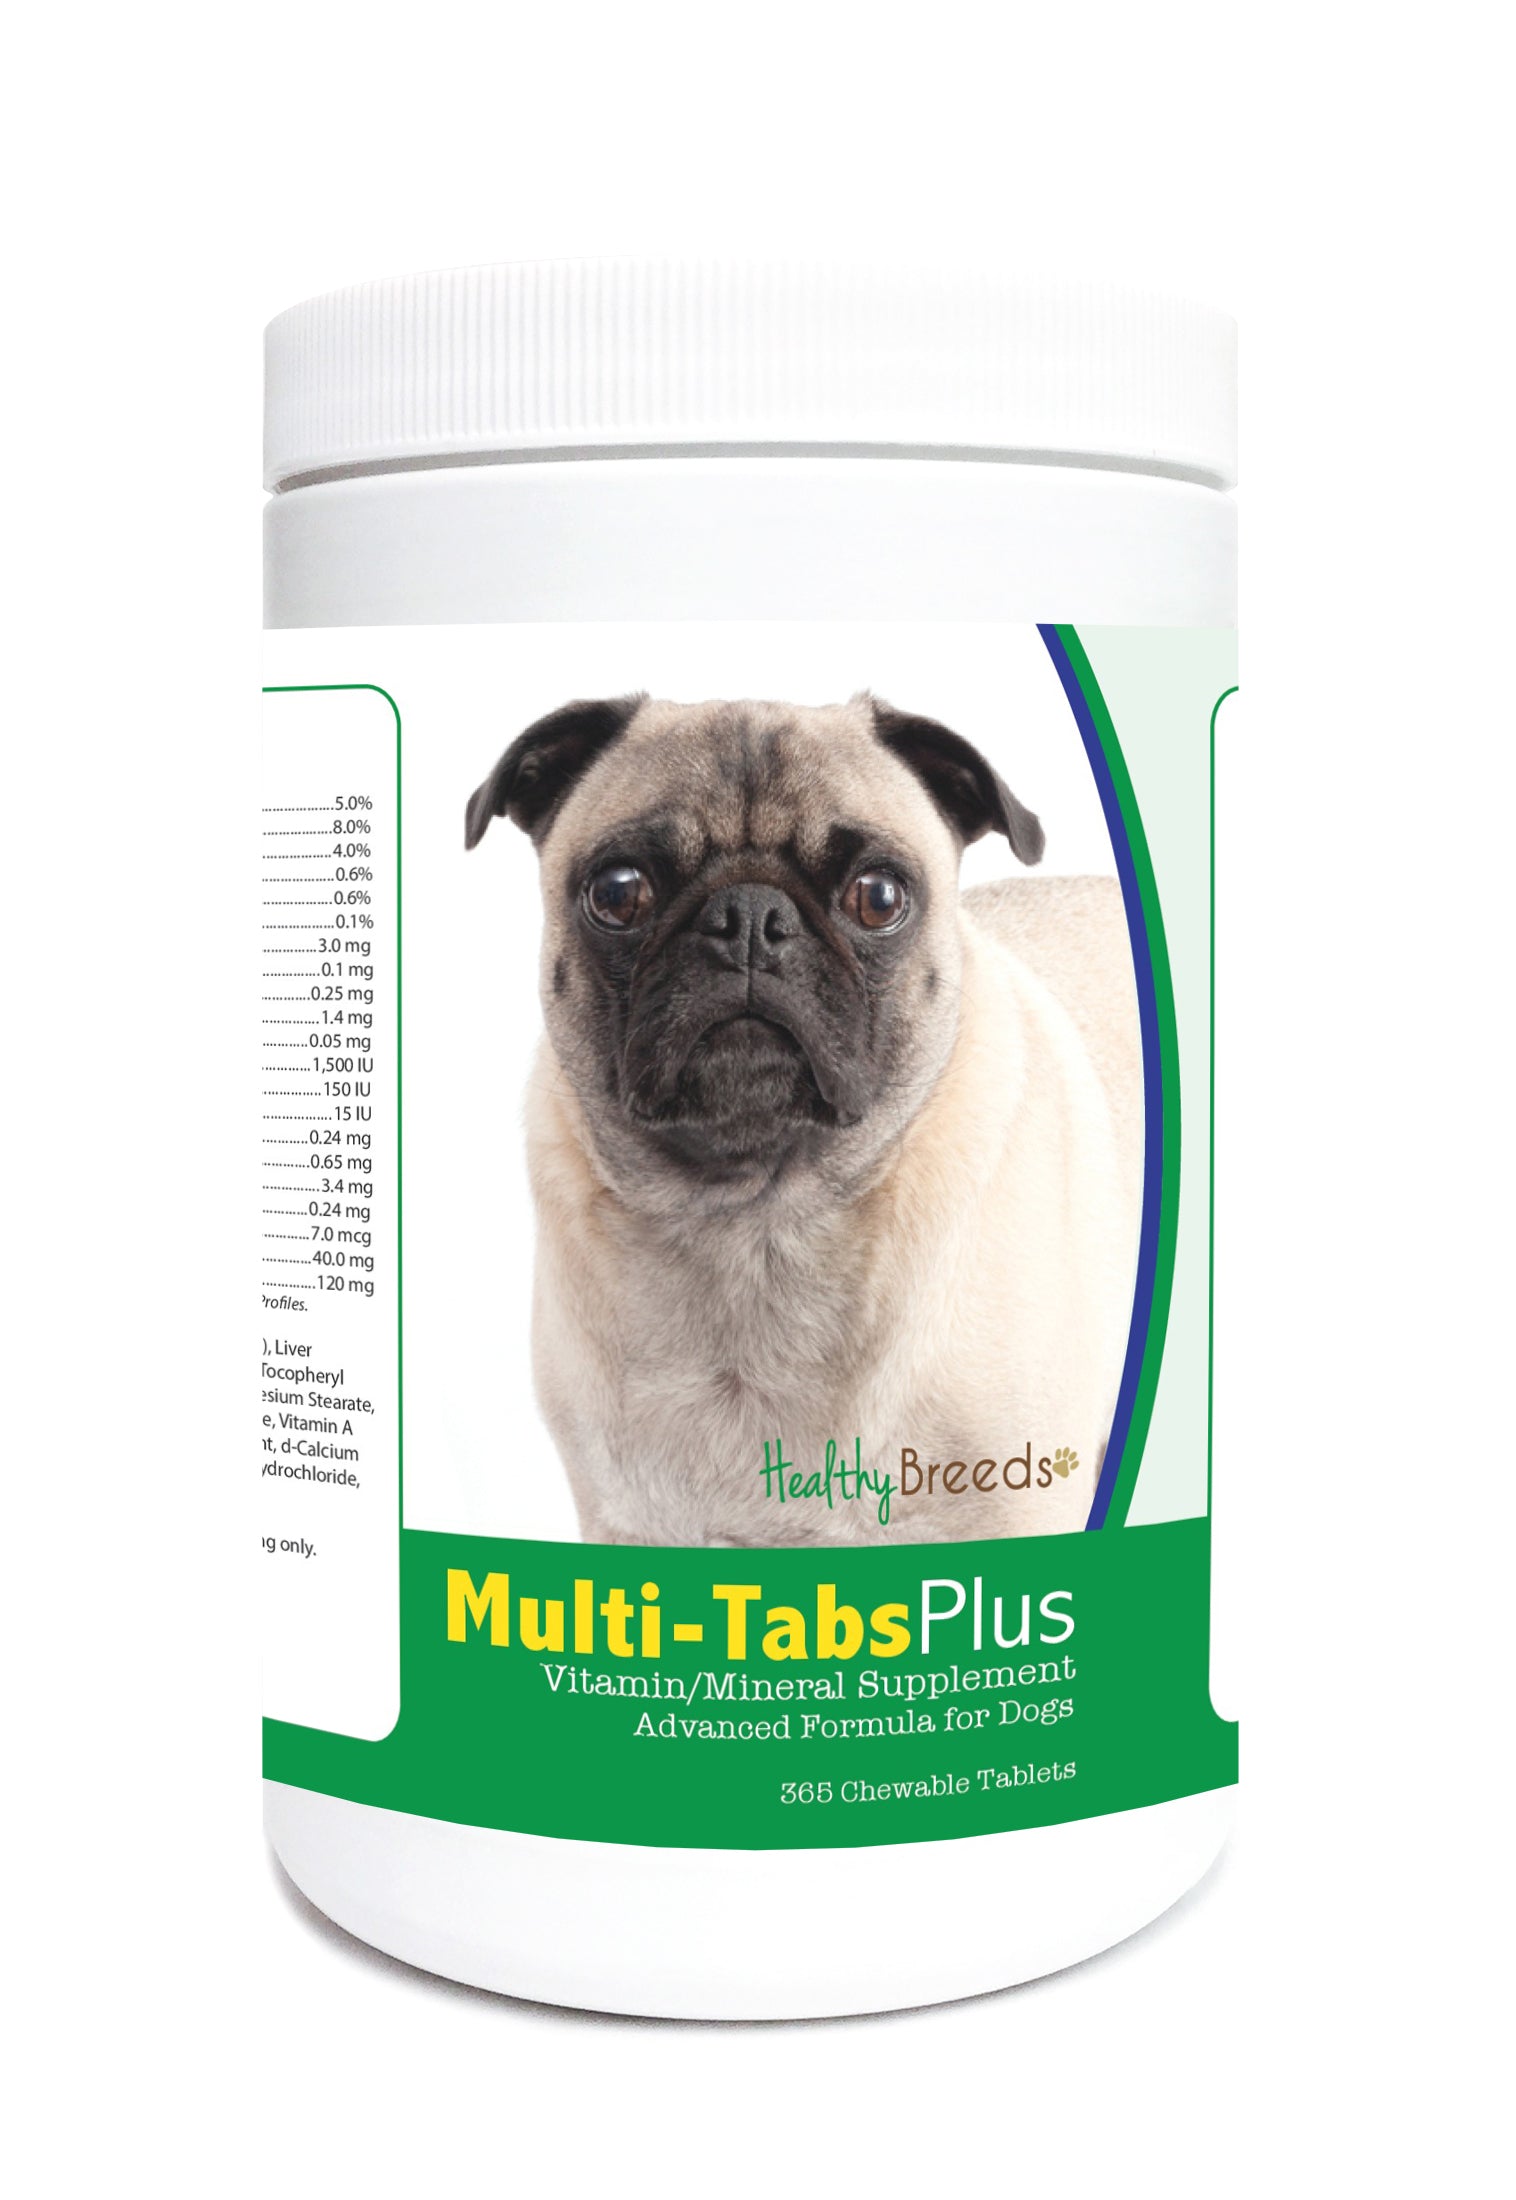 Pug Multi-Tabs Plus Chewable Tablets 365 Count